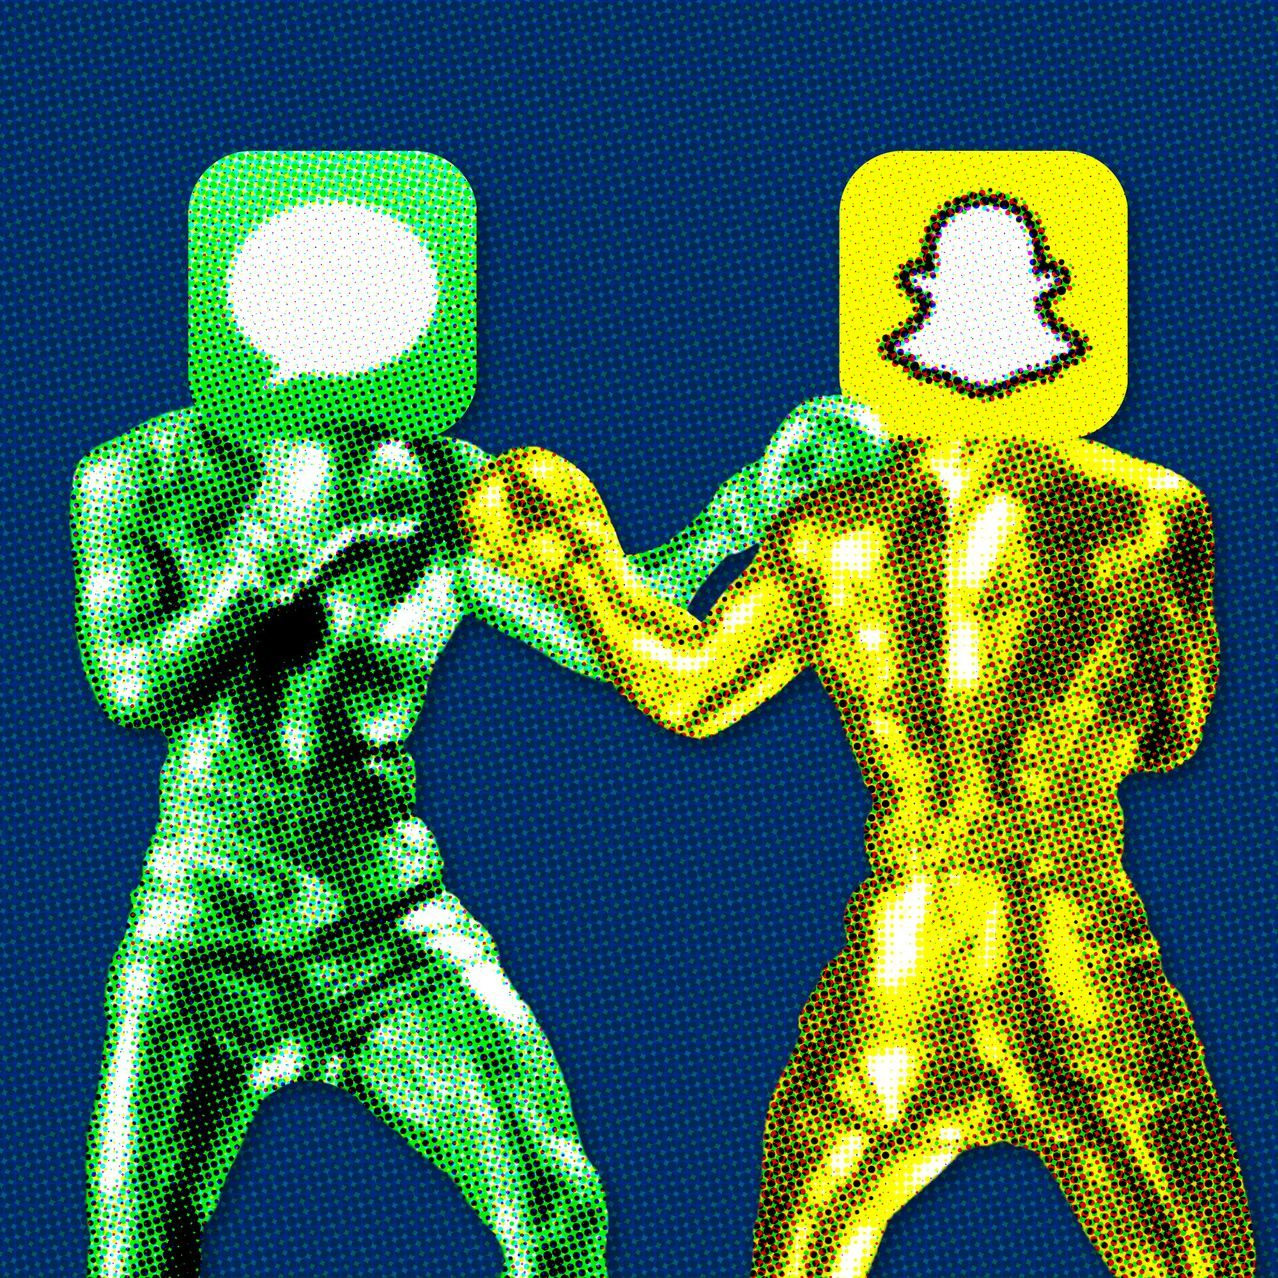 Gen Z thích iMessage hay Snapchat? - Ảnh 1.